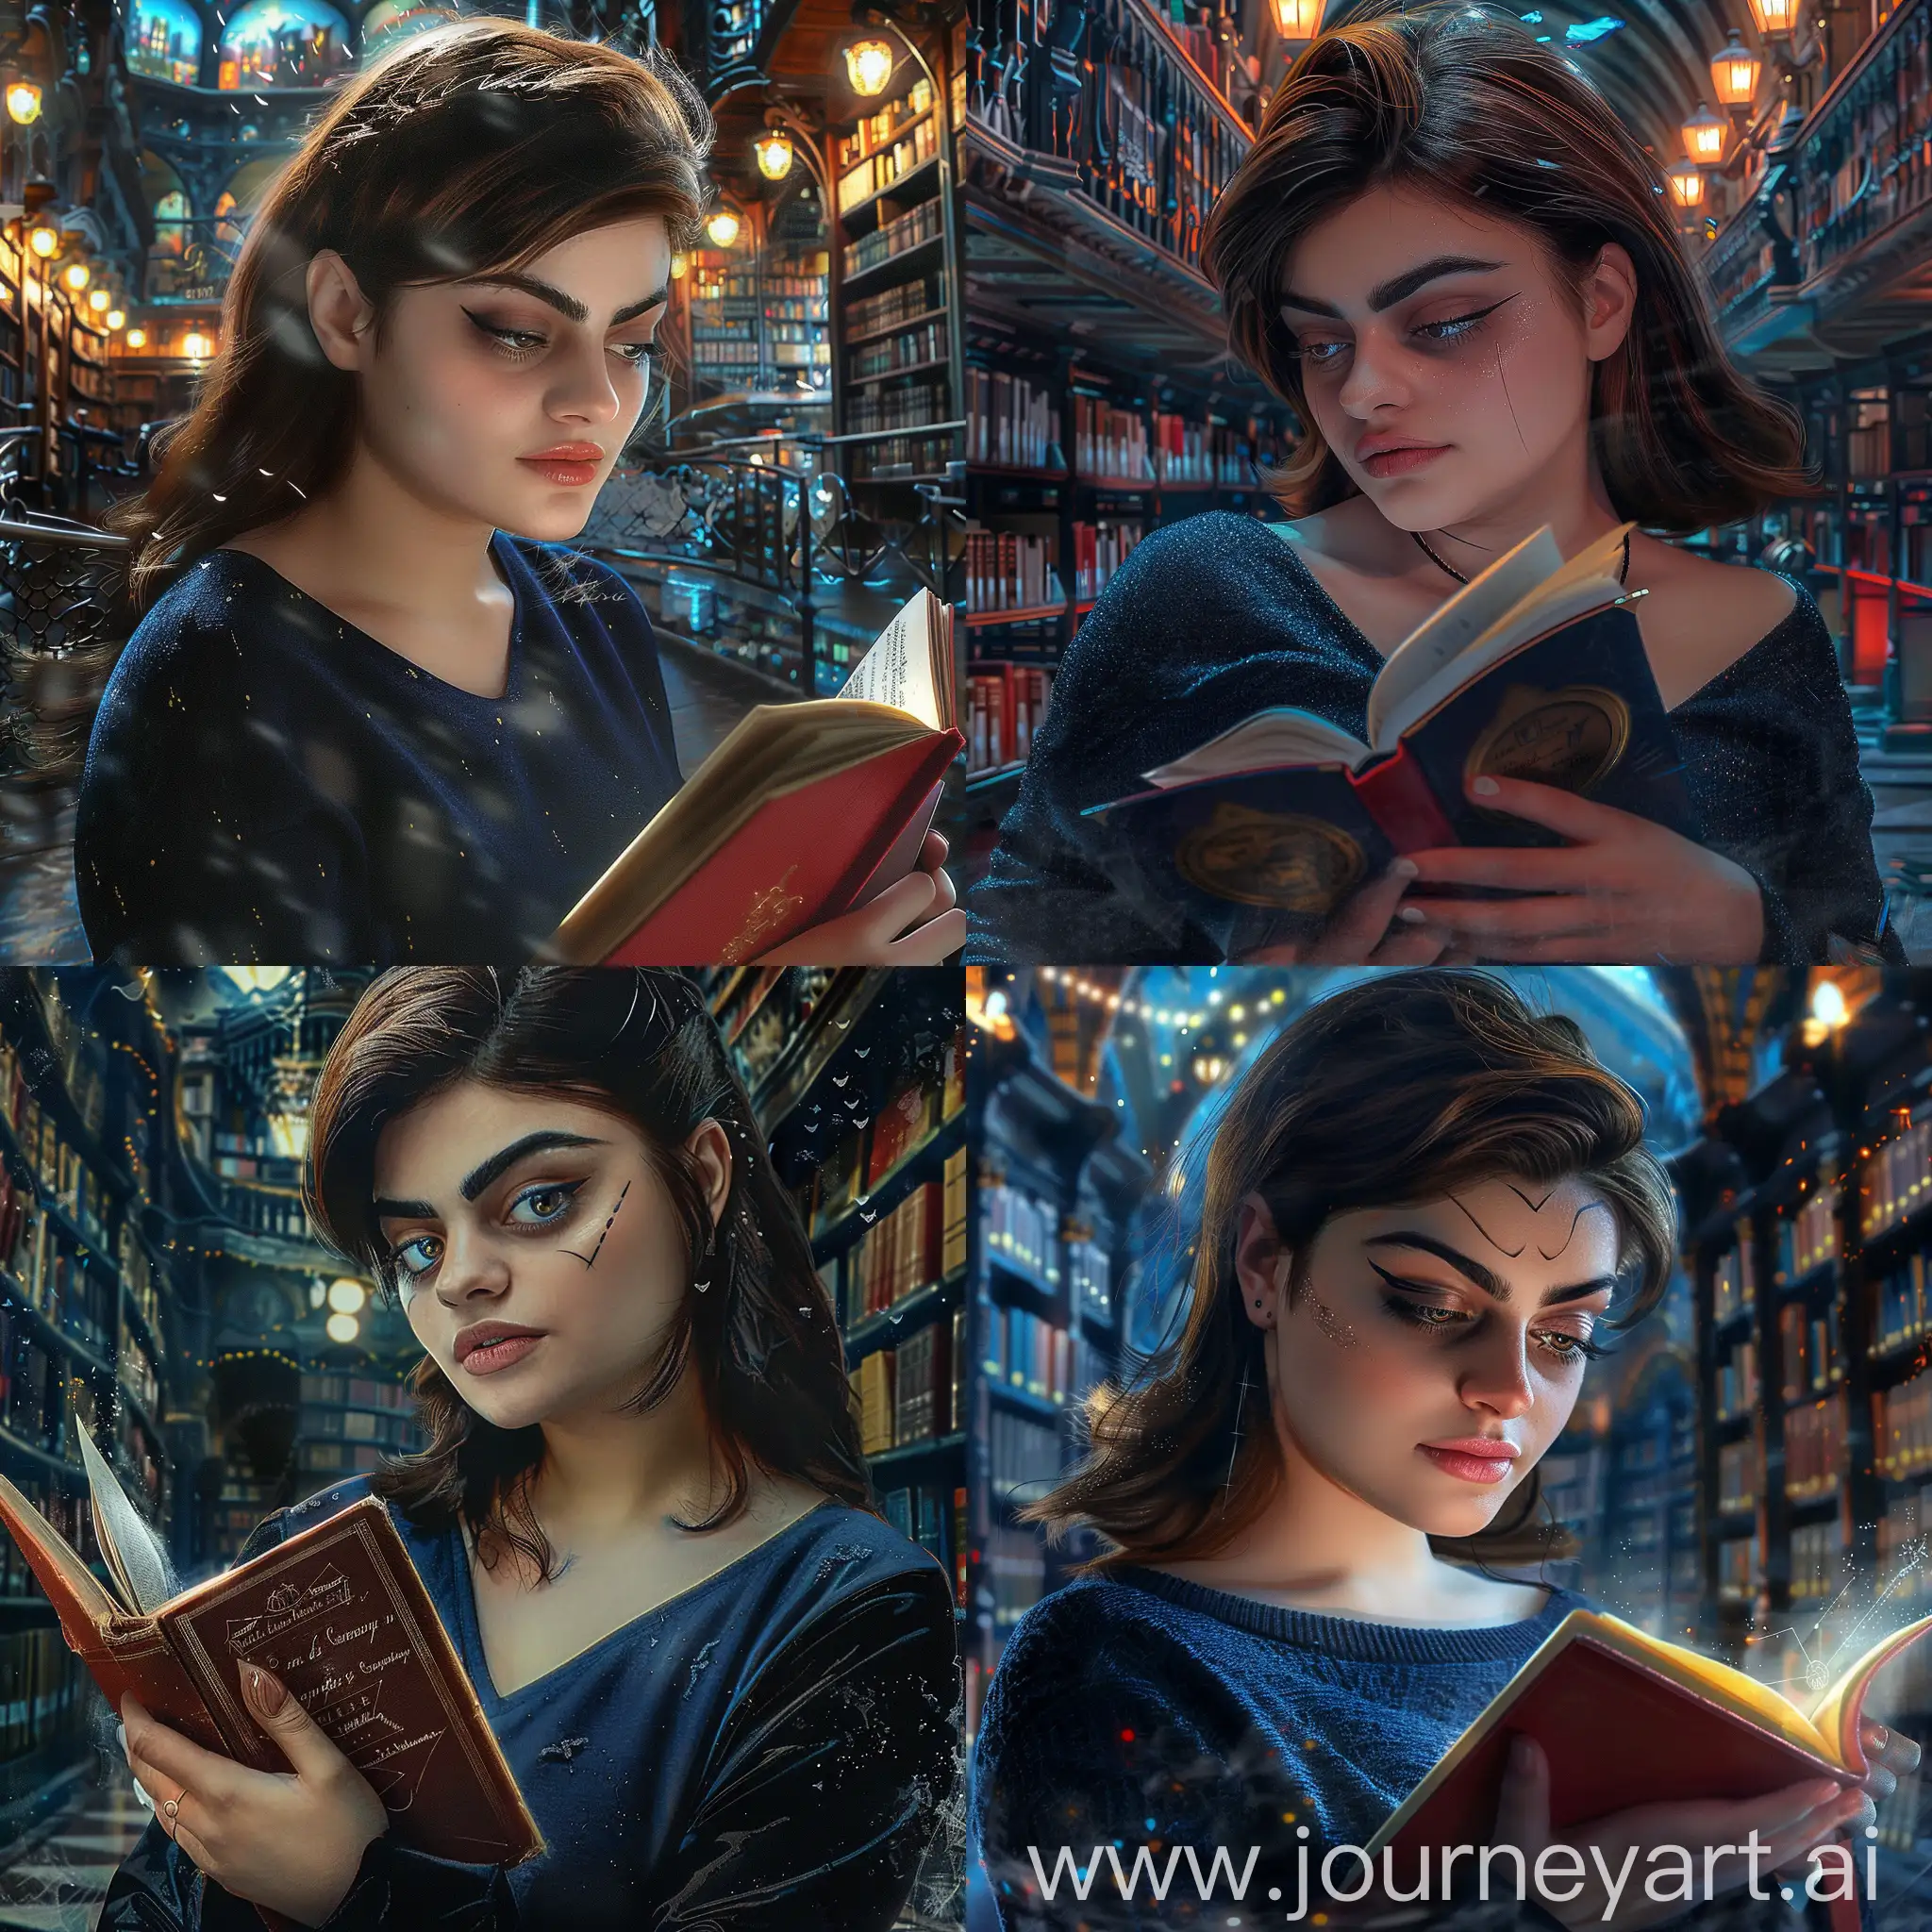 Enchanting-Girl-Immersed-in-Magic-Book-in-Dark-Fantasy-Library-City